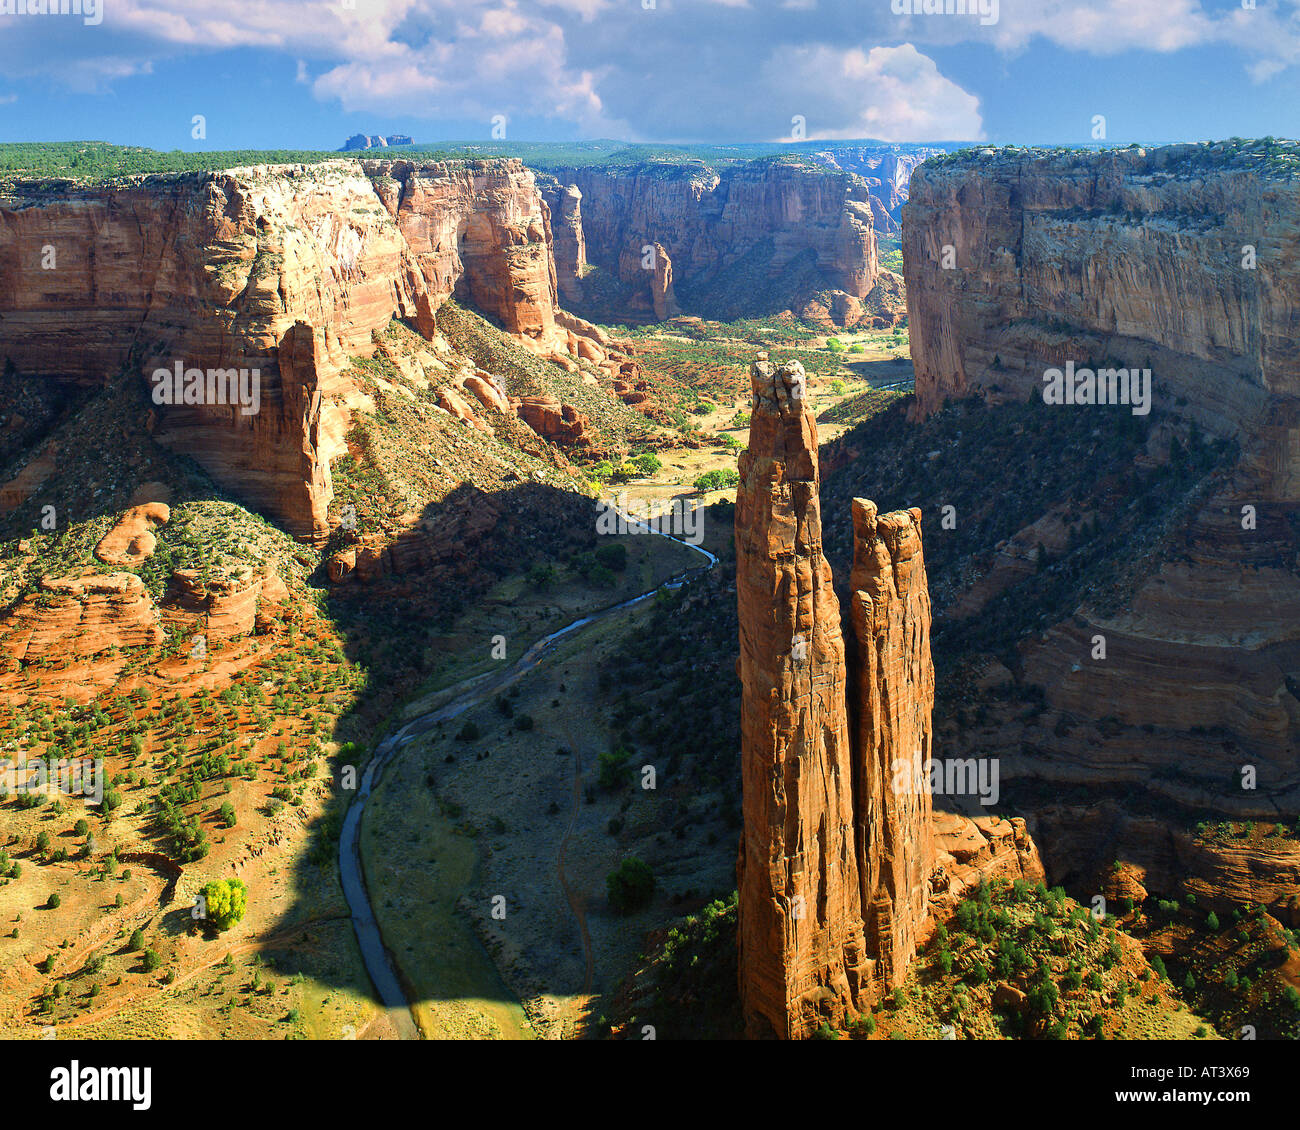 USA - ARIZONA:  Spider Rock at Canyon de Chelly National Monument Stock Photo